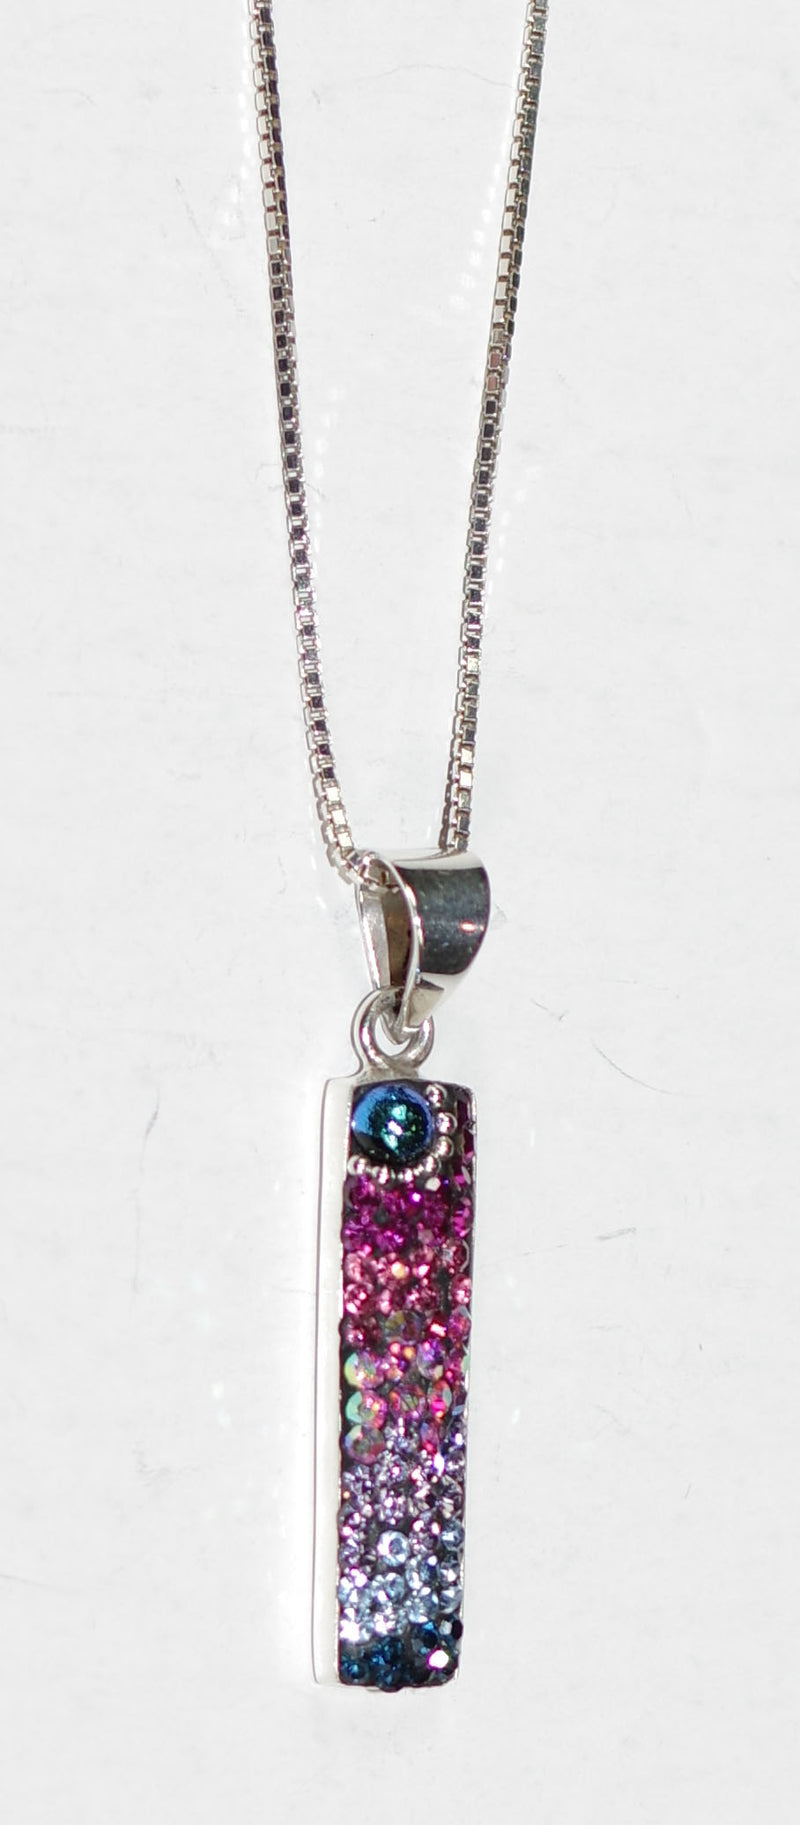 MOSAICO PENDANT PP-8549-B: multi color Austrian crystals in 1.25" solid silver pendant, 18-20 inch adjustable silver chain